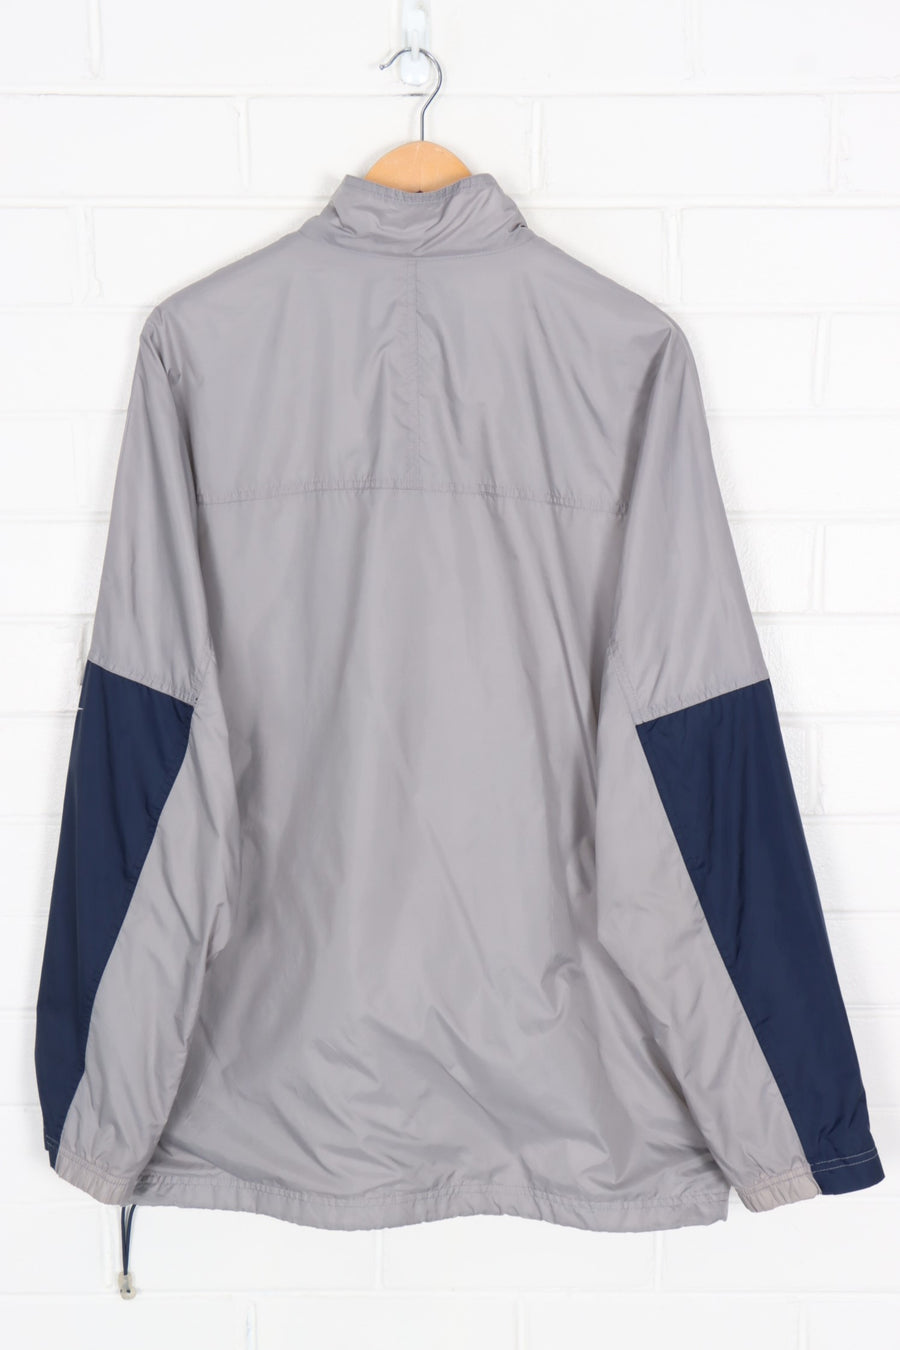 NIKE Grey & Navy Embroidered Windbreaker Jacket (XL)